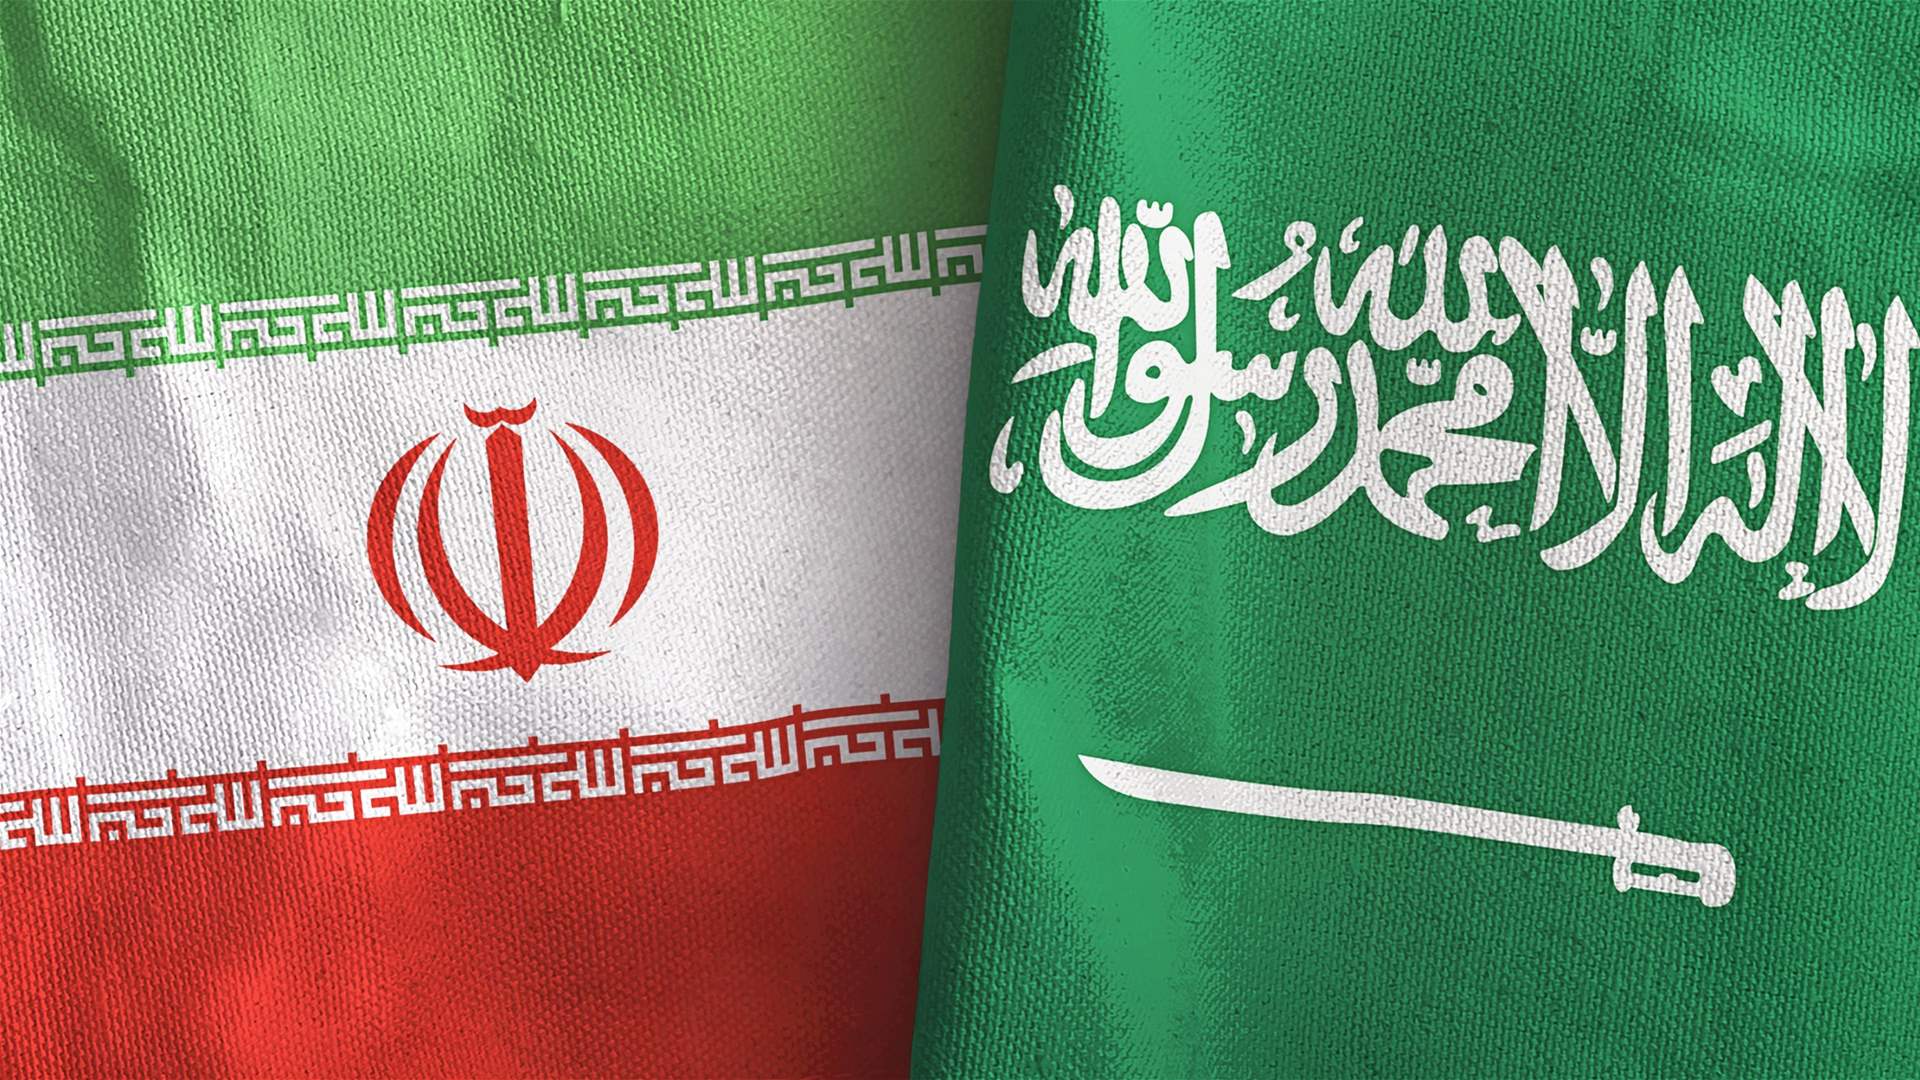 Building bridges: Iran and Saudi Arabia work to restore ties